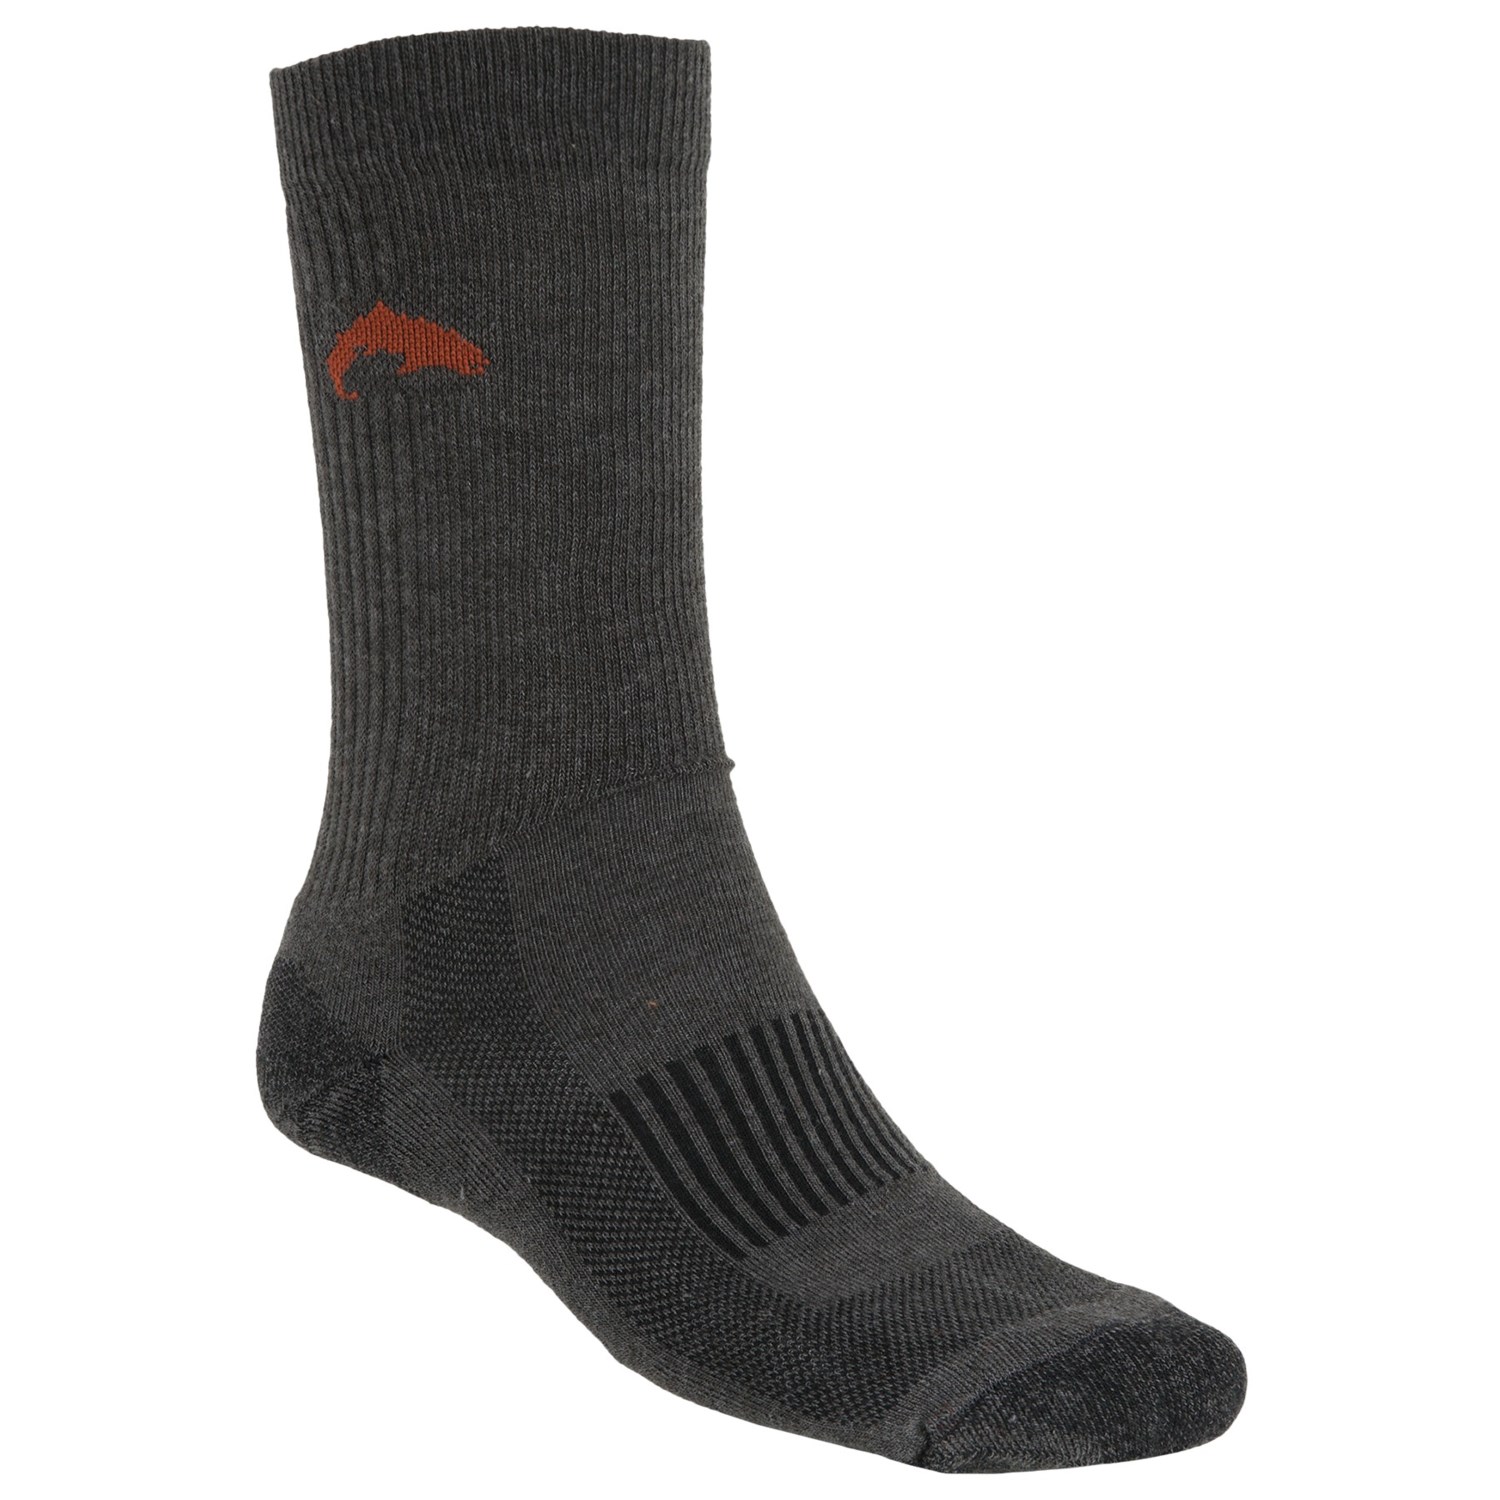 Simms Sport Crew Socks  Merino Wool For Men and Women in Charcoal